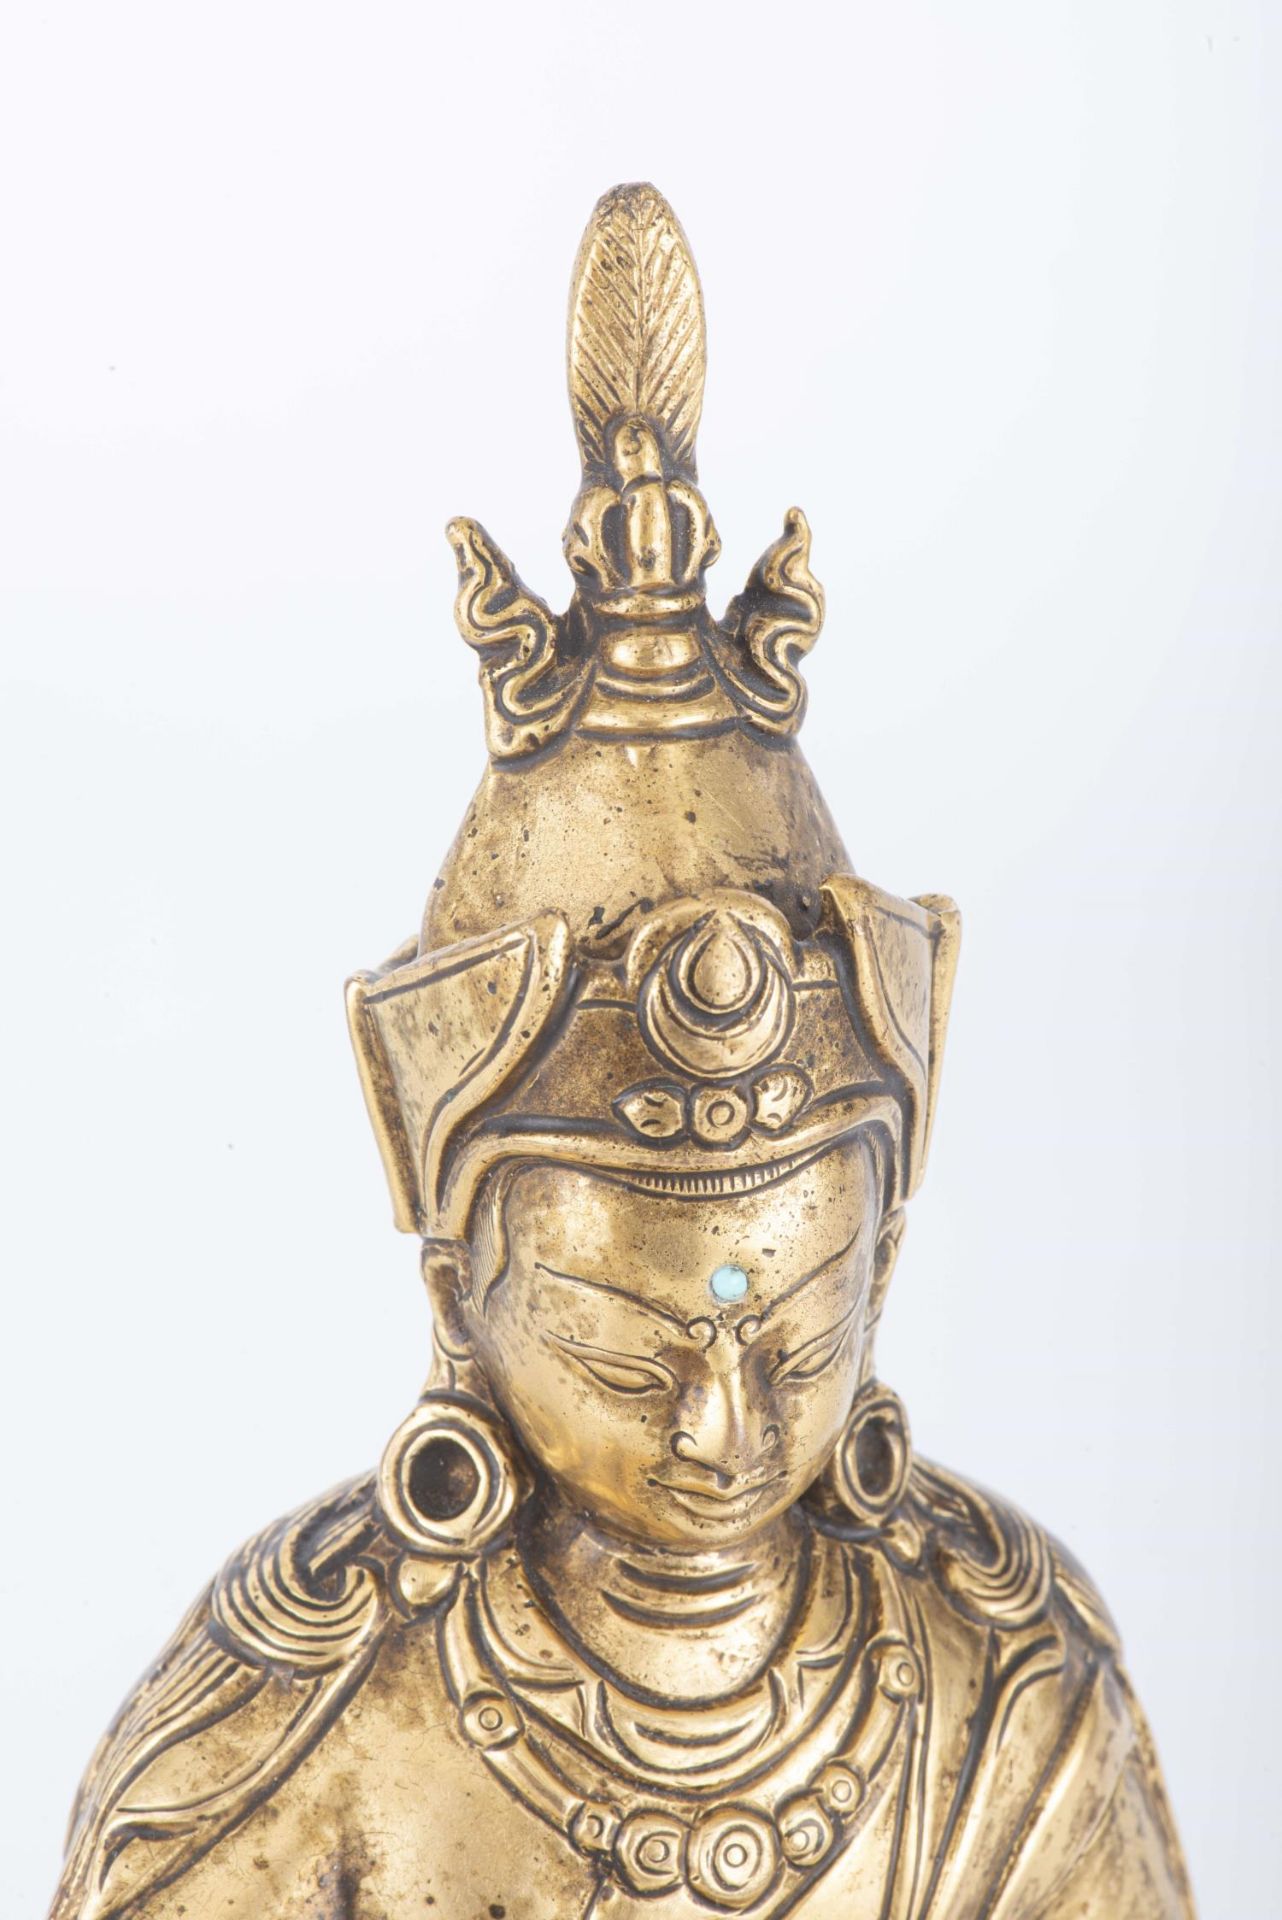 Lama du Tibet assis en bronze dor&amp;eacute;, XIX&amp;egrave;me... - Image 6 of 9